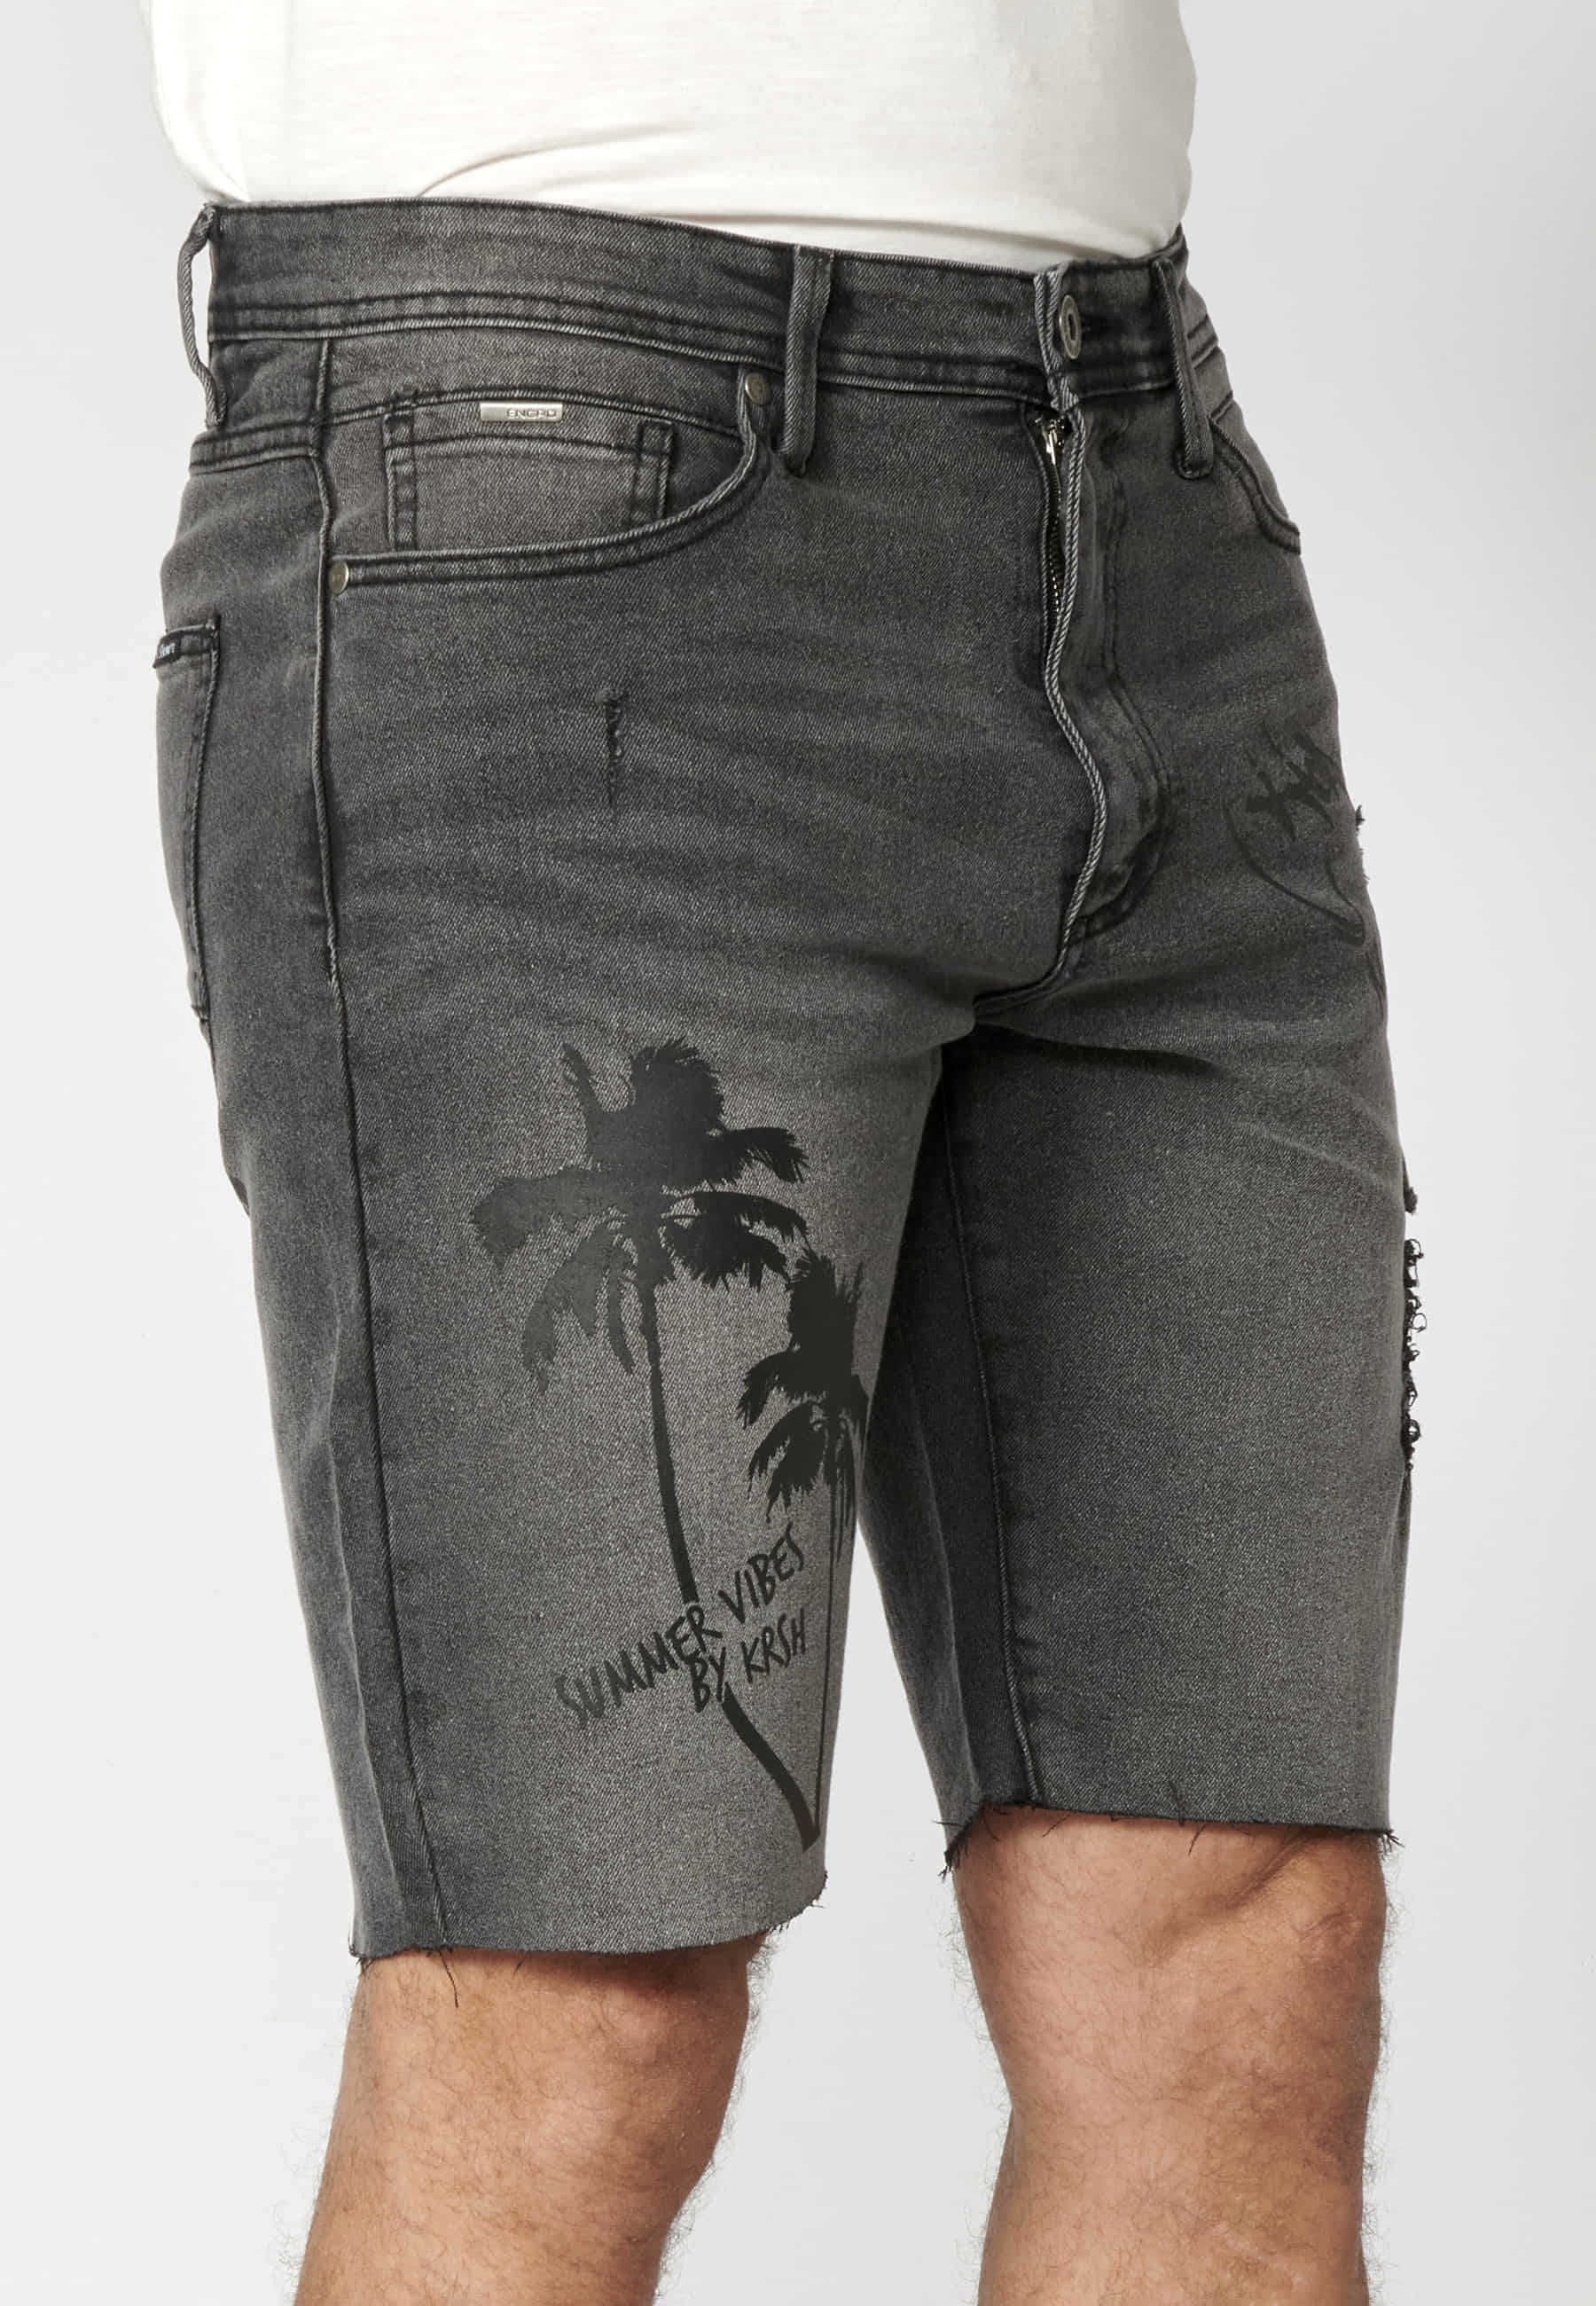 Black Denim bermuda shorts for Men